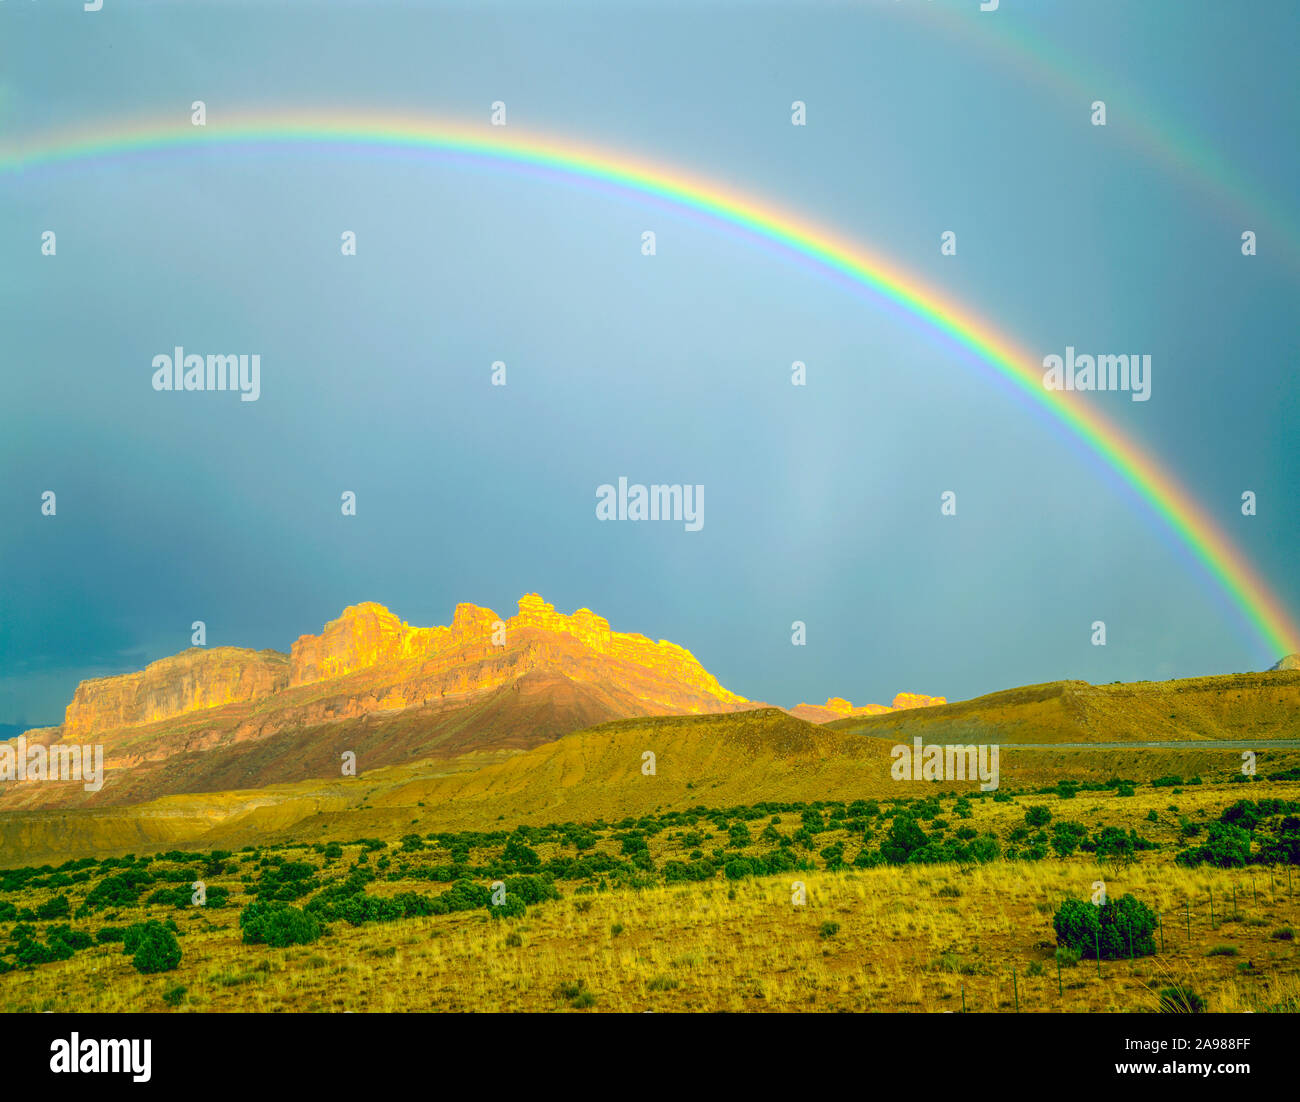 Rainbow over the Swell, Ran Rafael Swell Wilderness, Utah Stock Photo